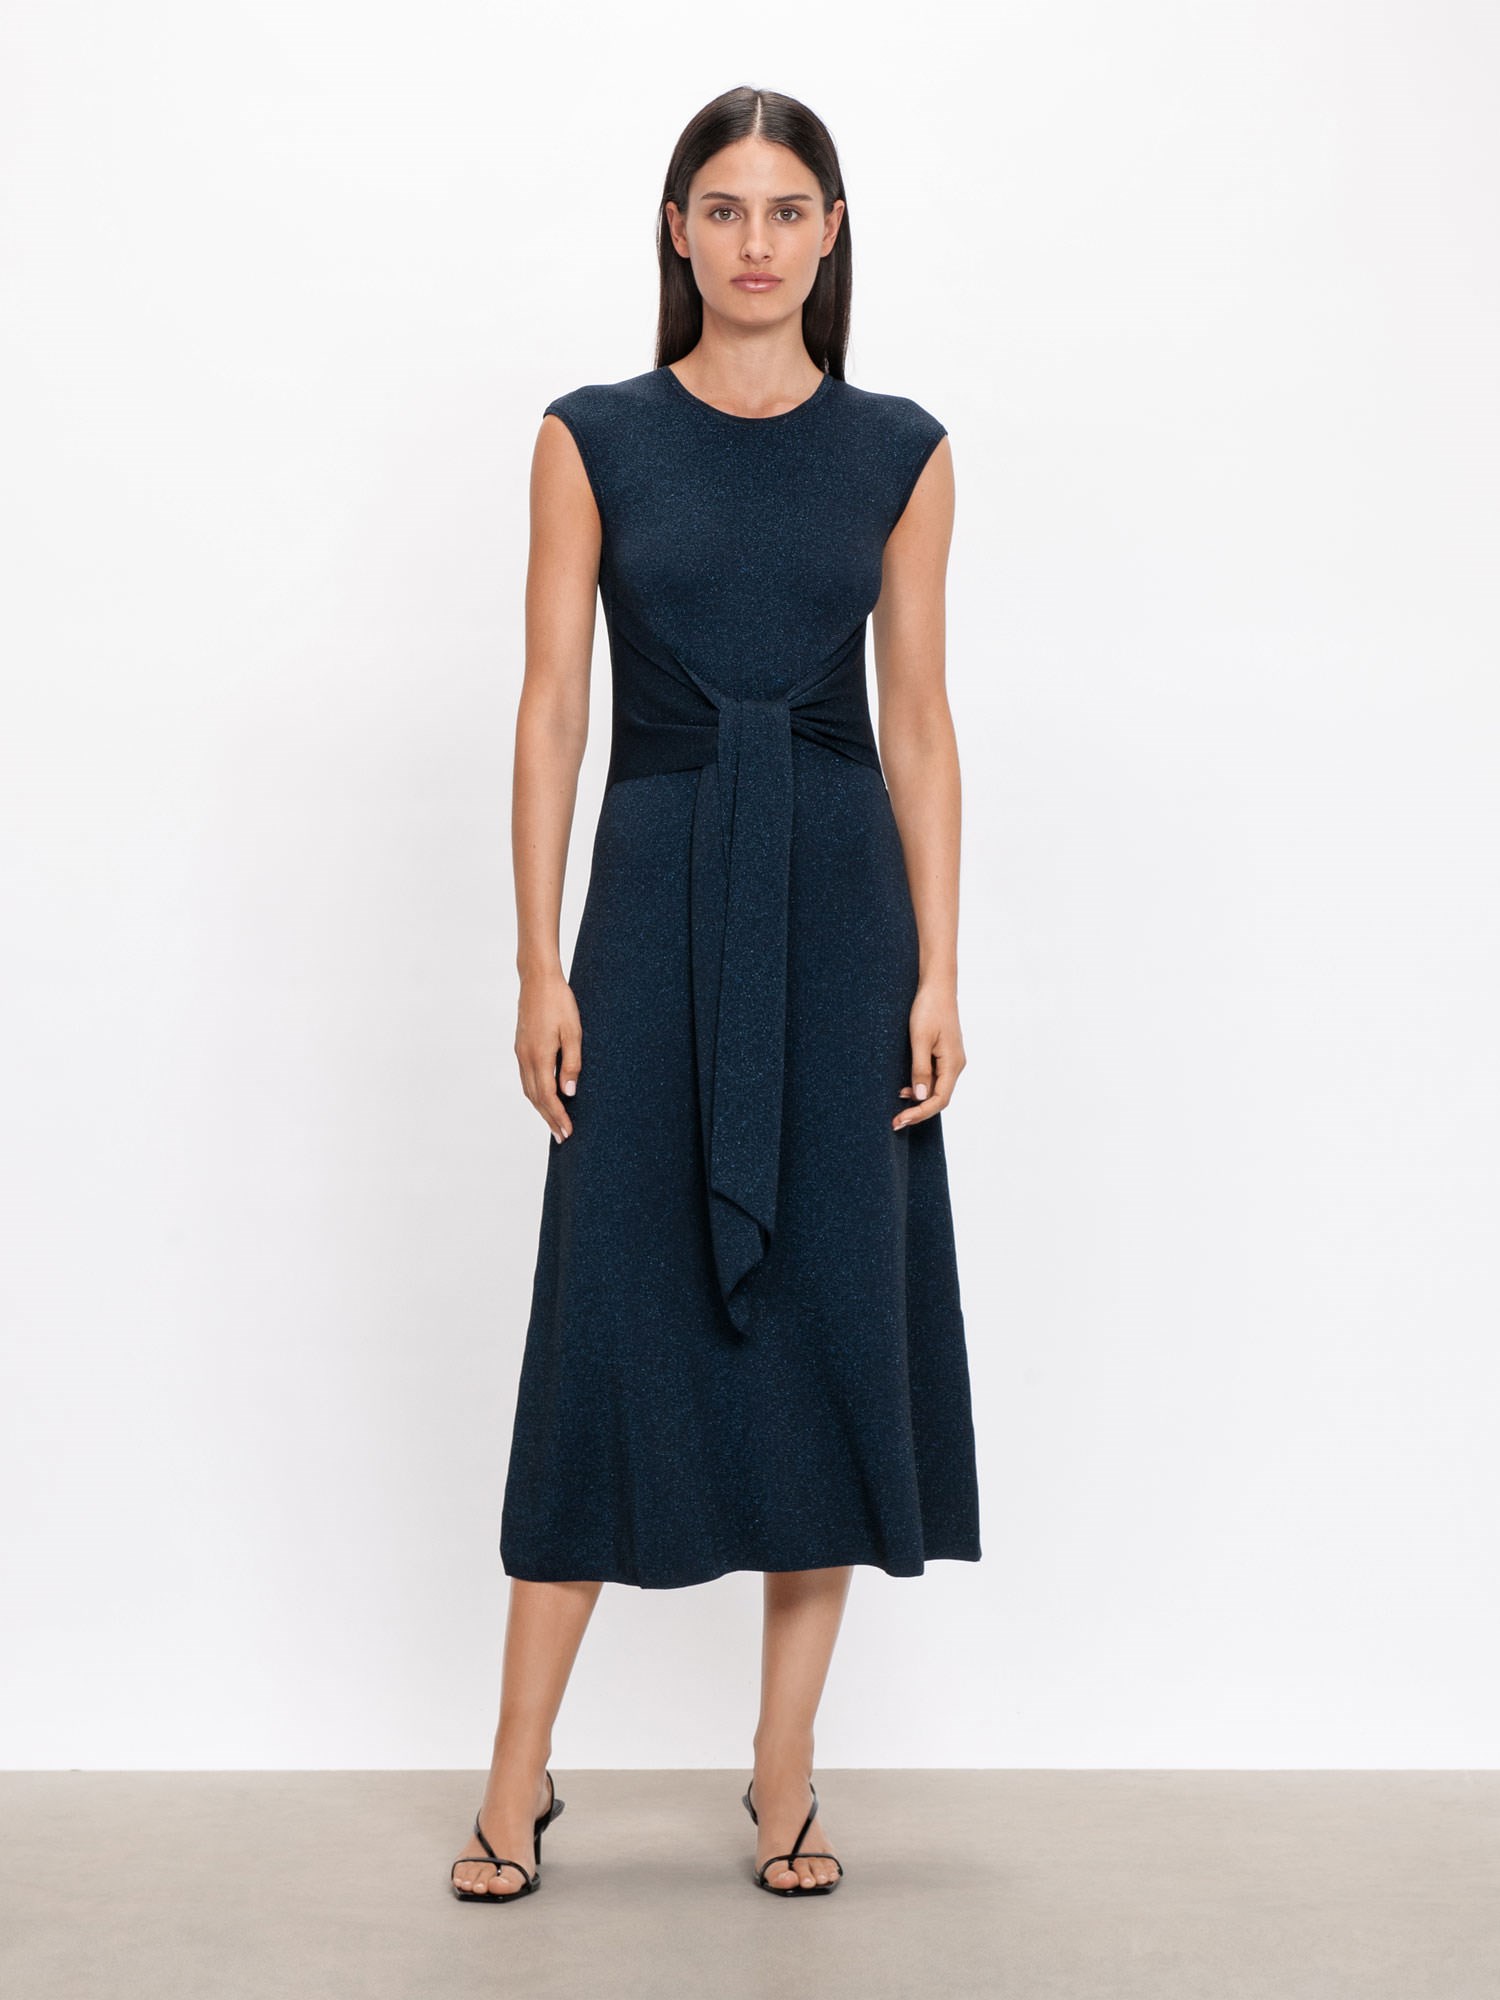 Lurex Tie Front Knit Dress | Buy Knitwear Online - Veronika Maine